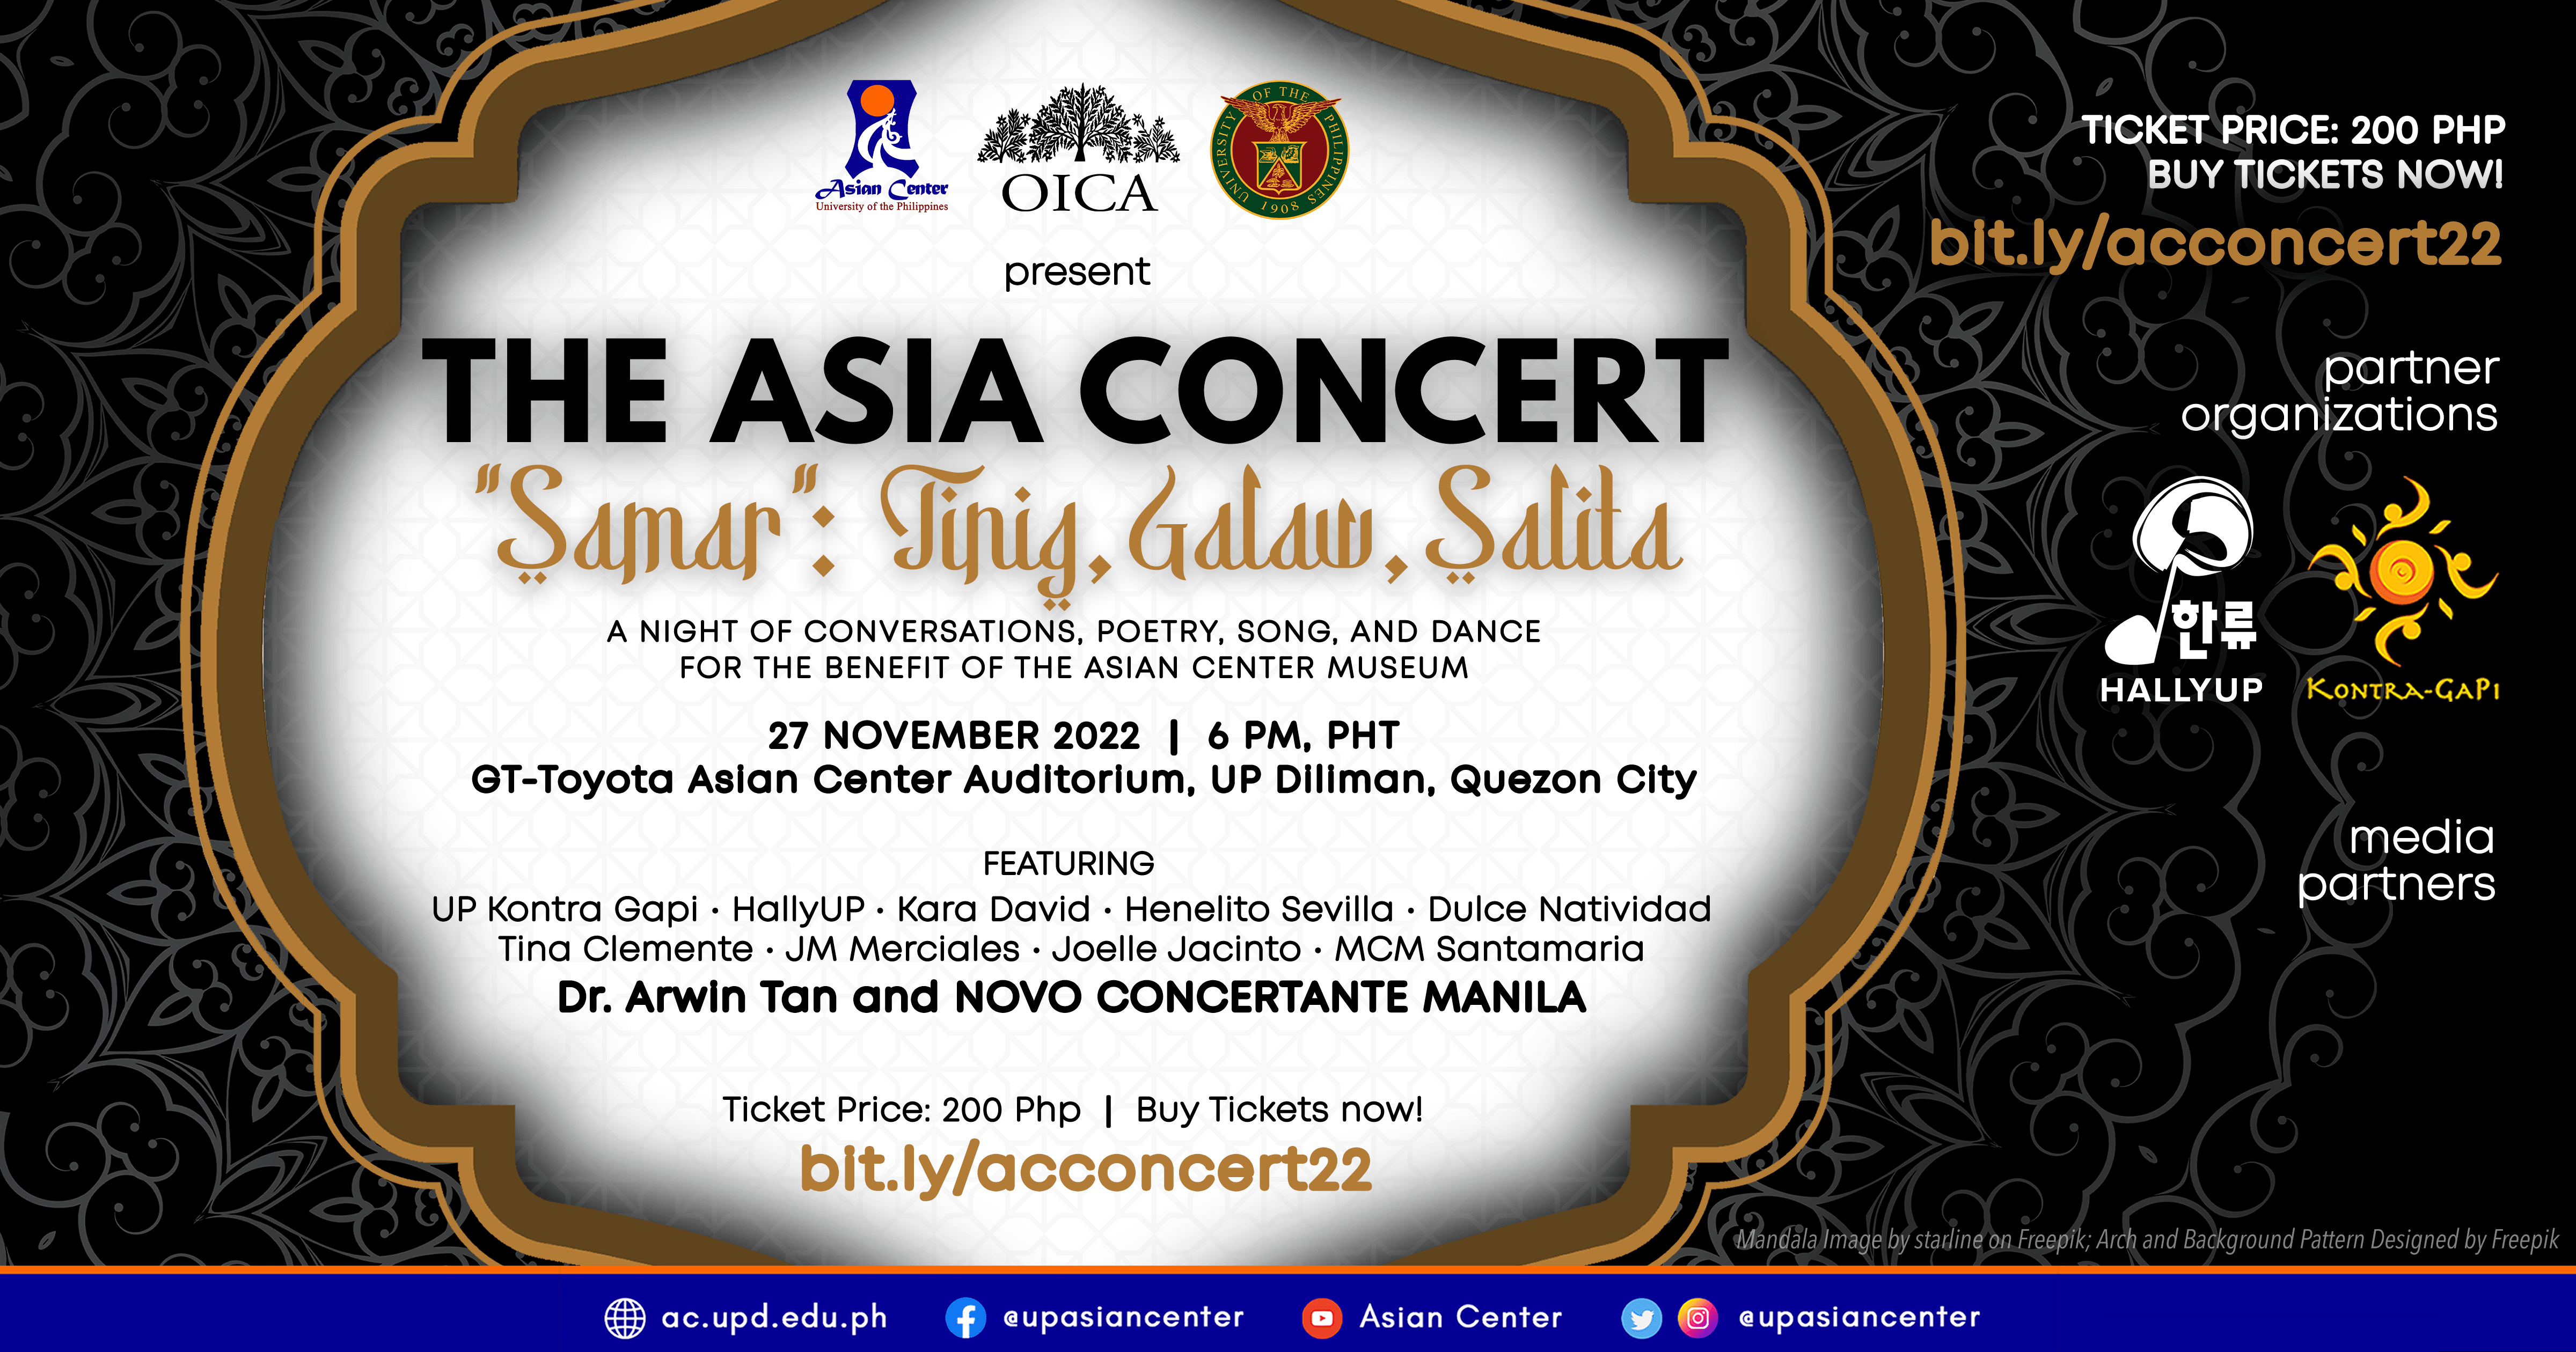 27 November 2022 | The Asia Concert - 